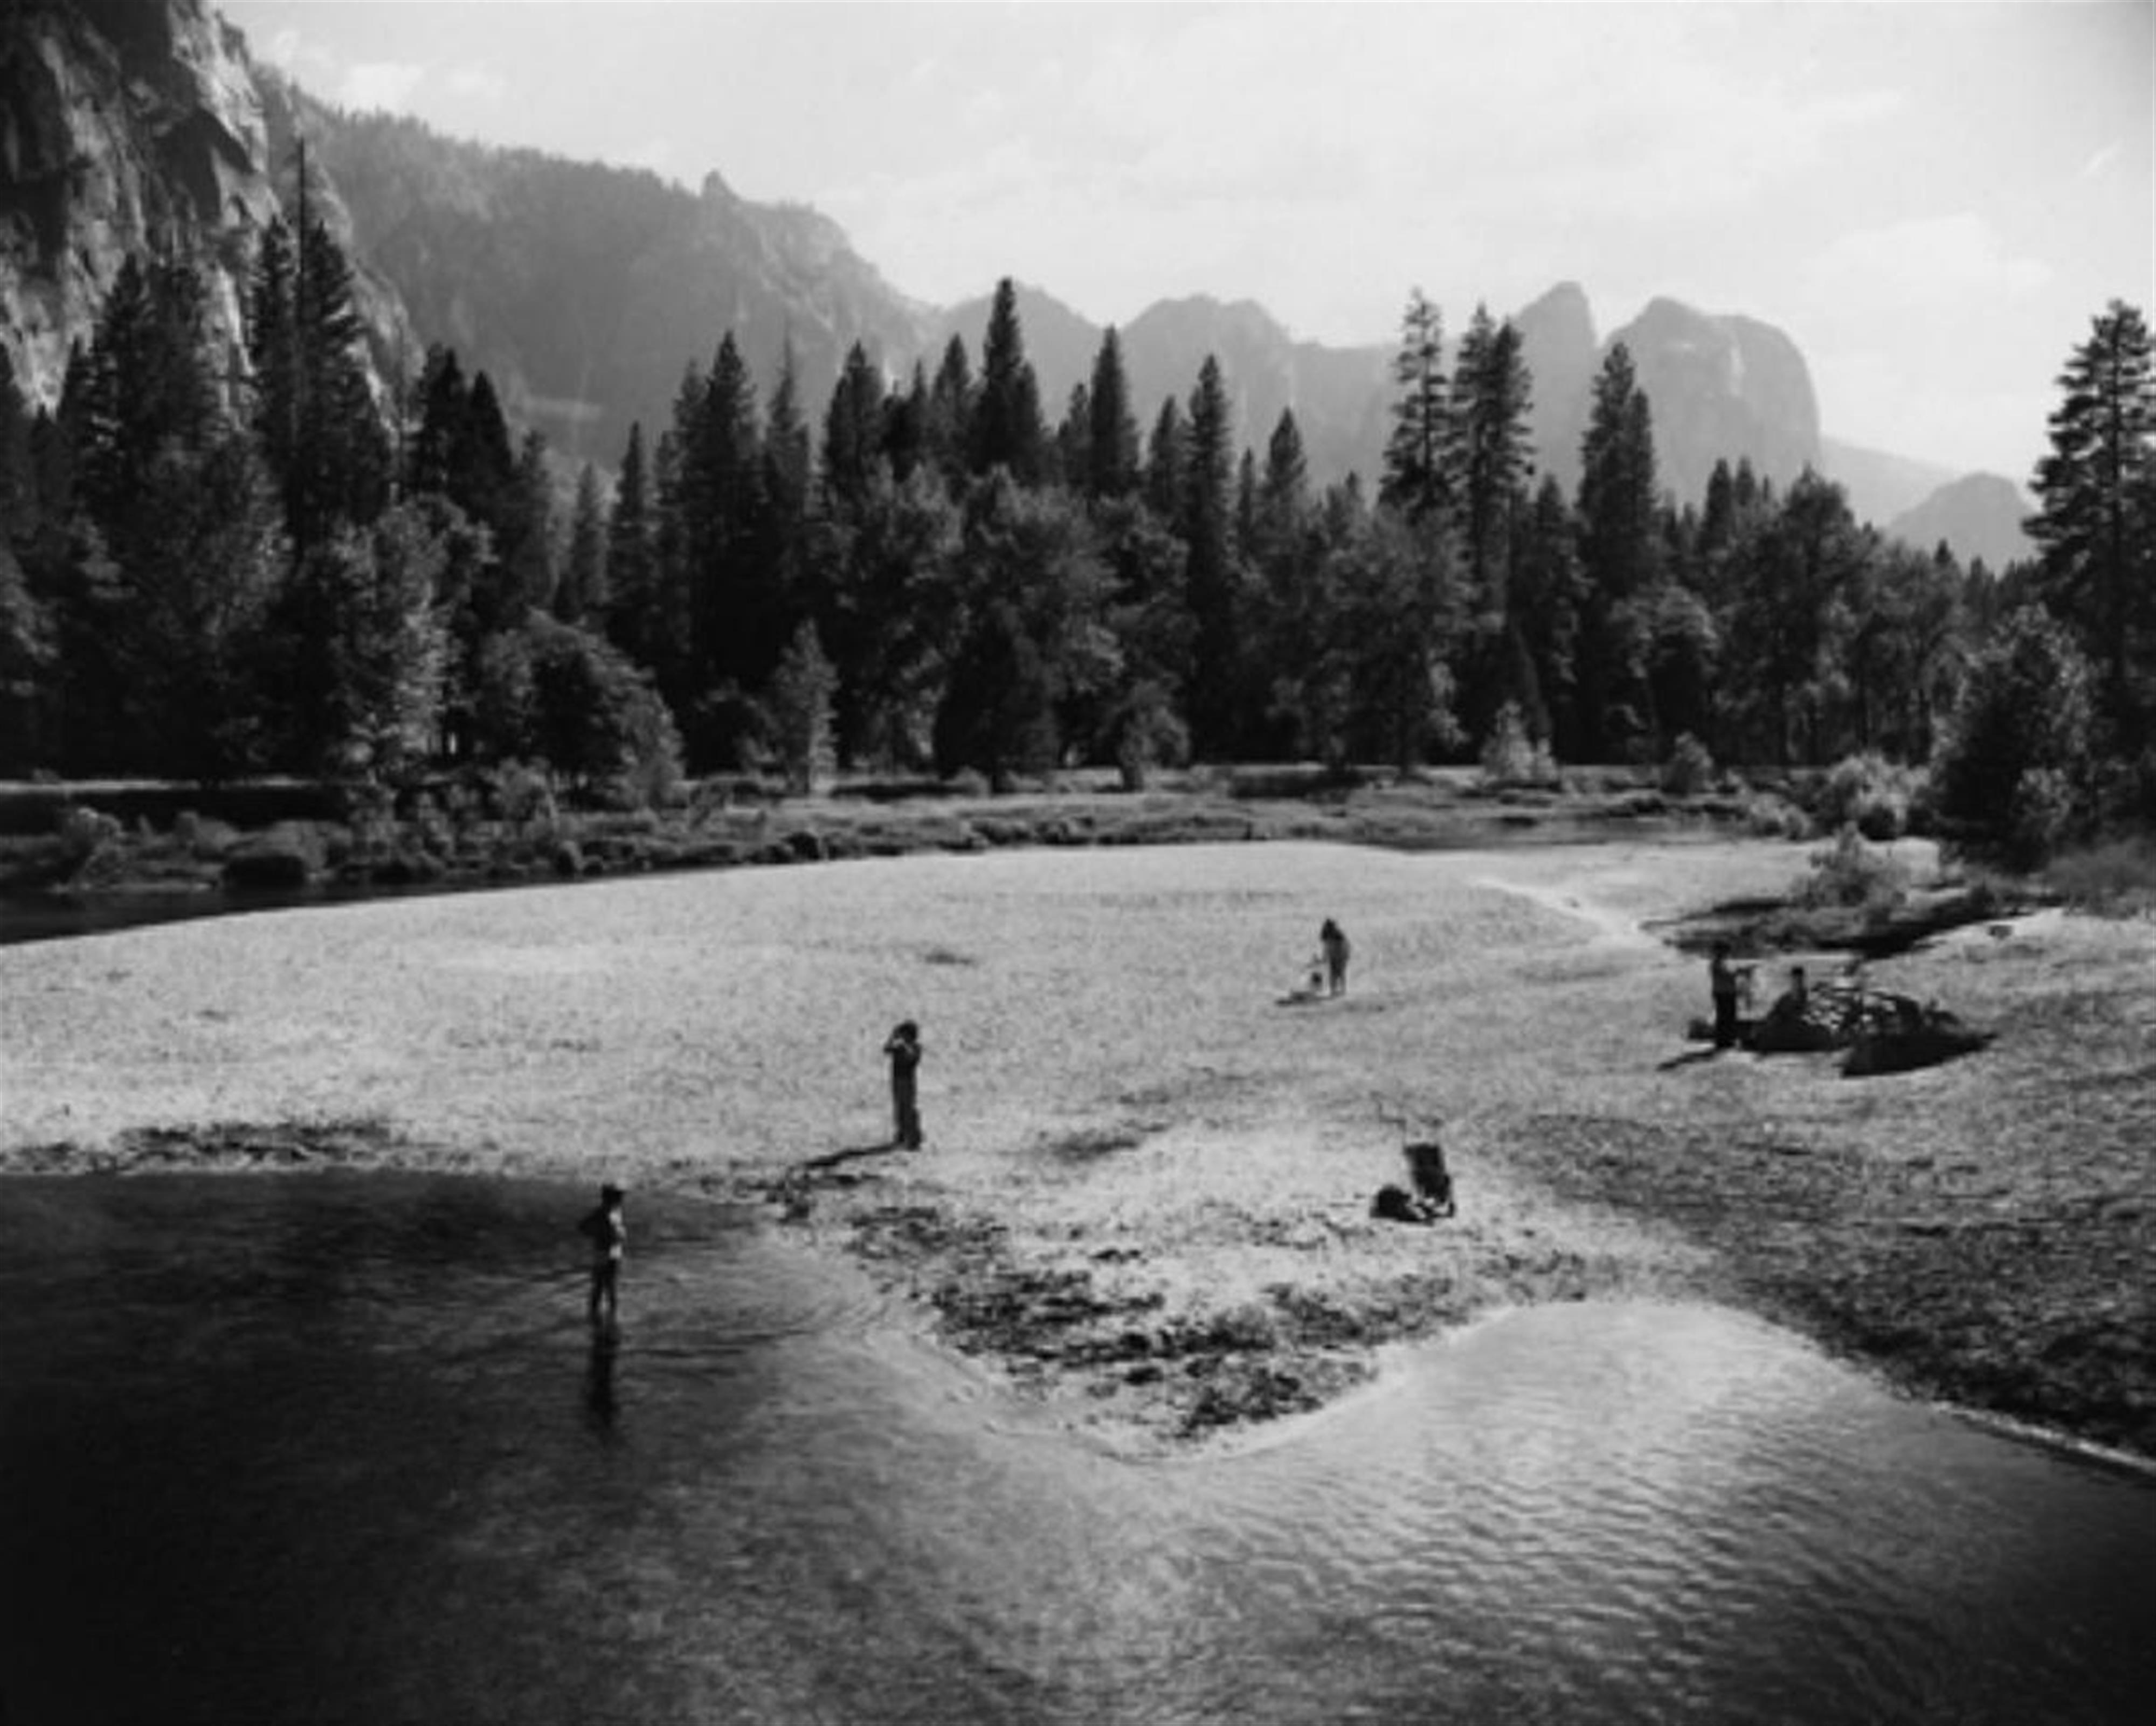 Stephen Shore - Merced River, Yosemite National Park - image-1